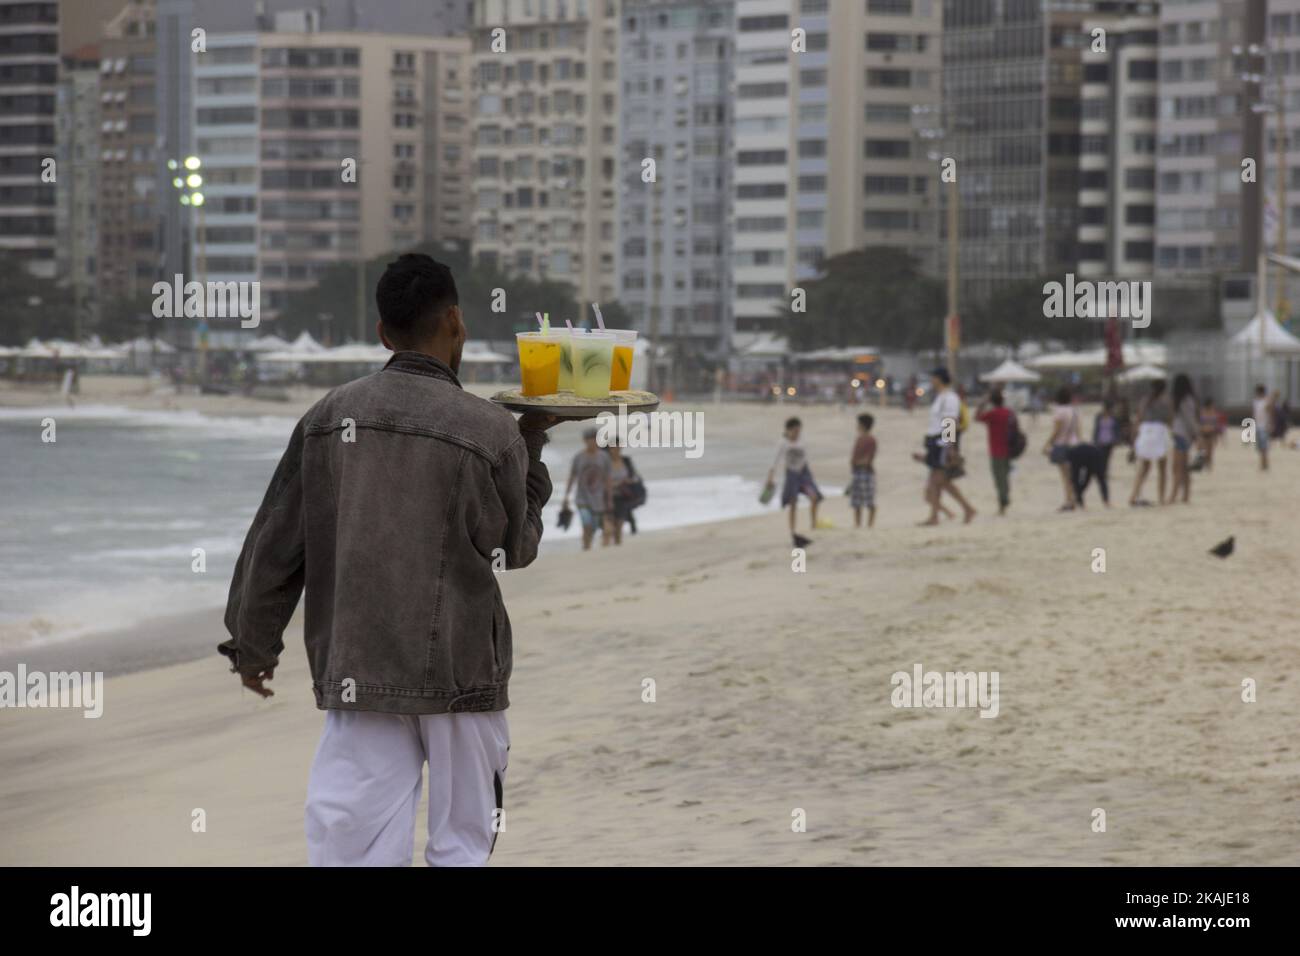 Rio de Janeiro, Brasile, 21 luglio 2016: L'uomo vende Caipirinha sulla spiaggia di Copacabana. Caipirinha è una bevanda tipica brasiliana fatta con agrumi e cachaa (rum brasiliano). (Foto di Luiz Souza/NurPhoto) *** Please use Credit from Credit Field *** Foto Stock